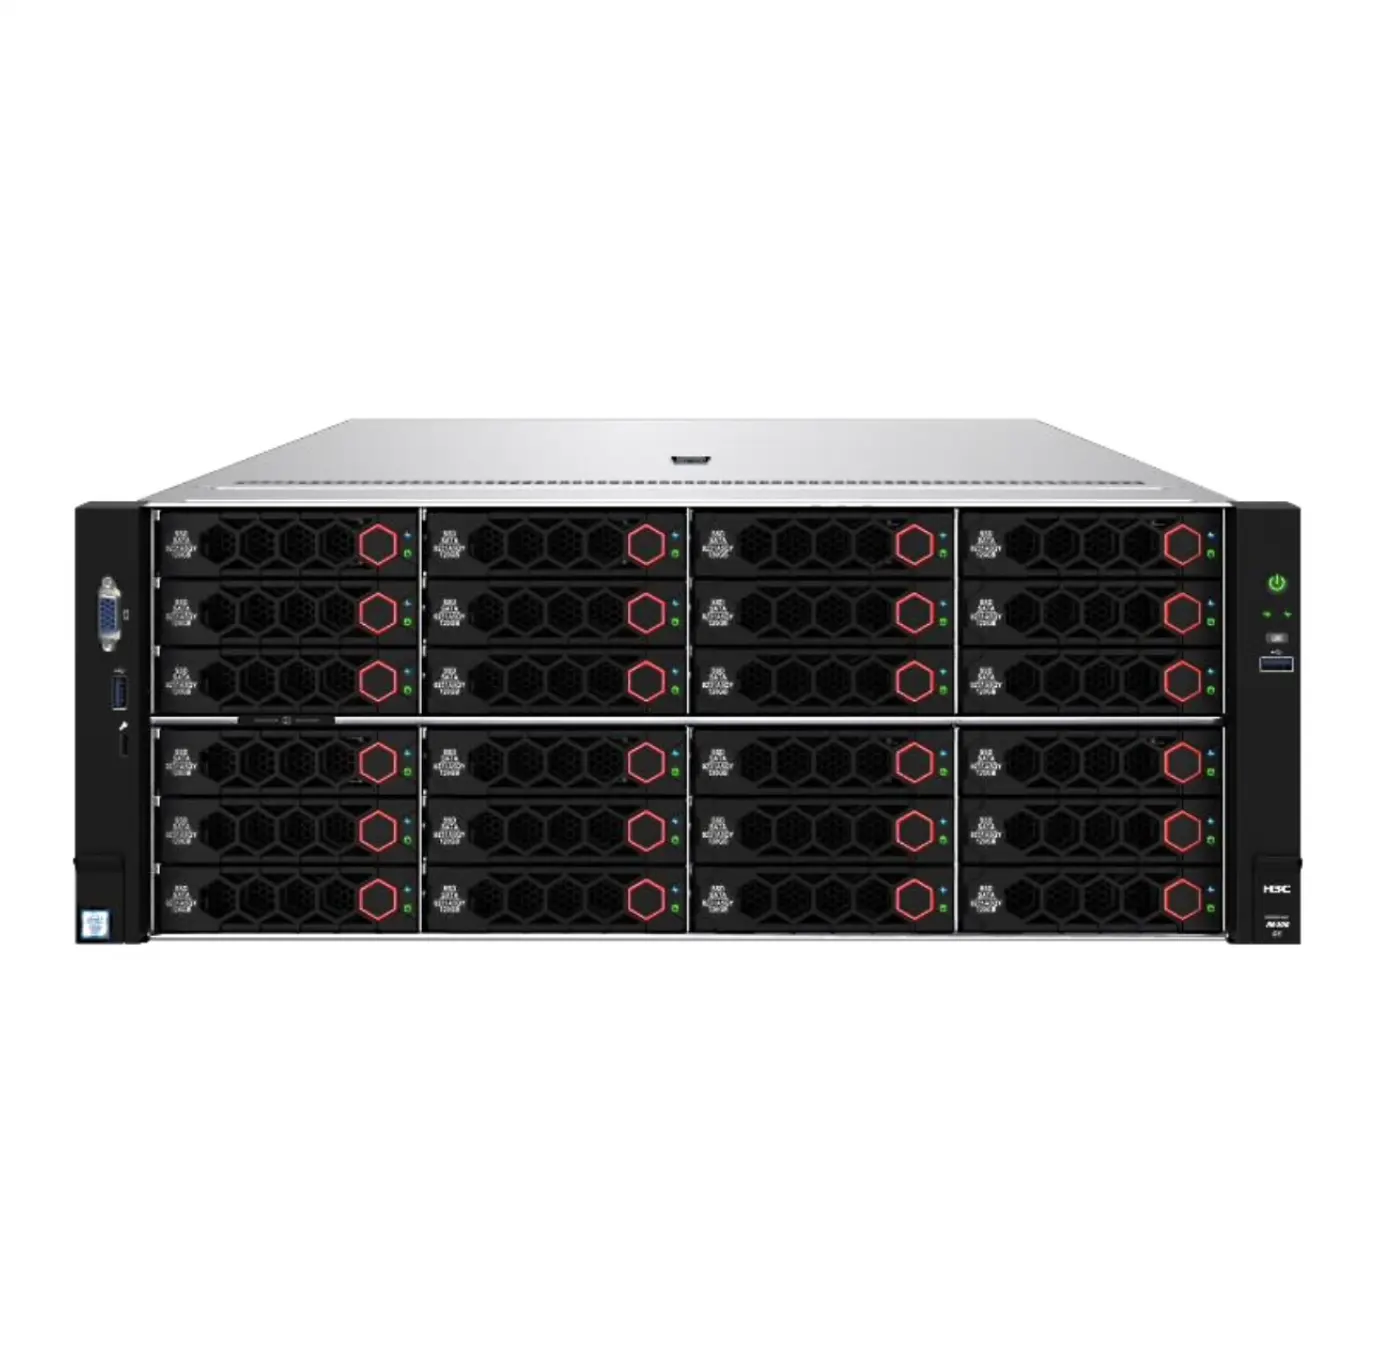 H3C UniServer R5300 G5 4U Iks Server GPU Server R5300G5 Home Assistant Server